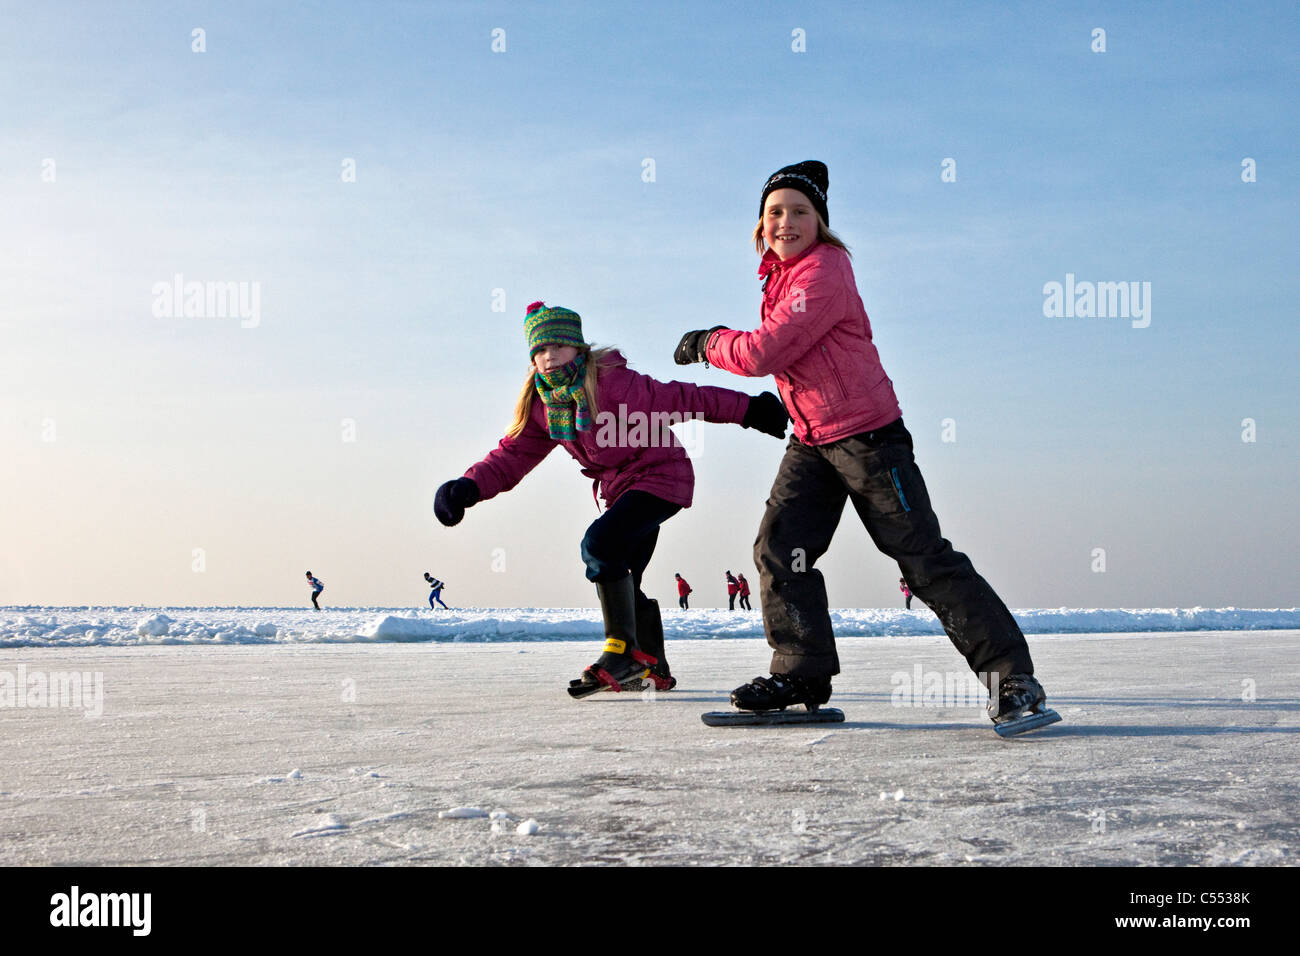 The Netherlands, Hindeloopen, children ice skating on lake called IJsselmeer. Stock Photo